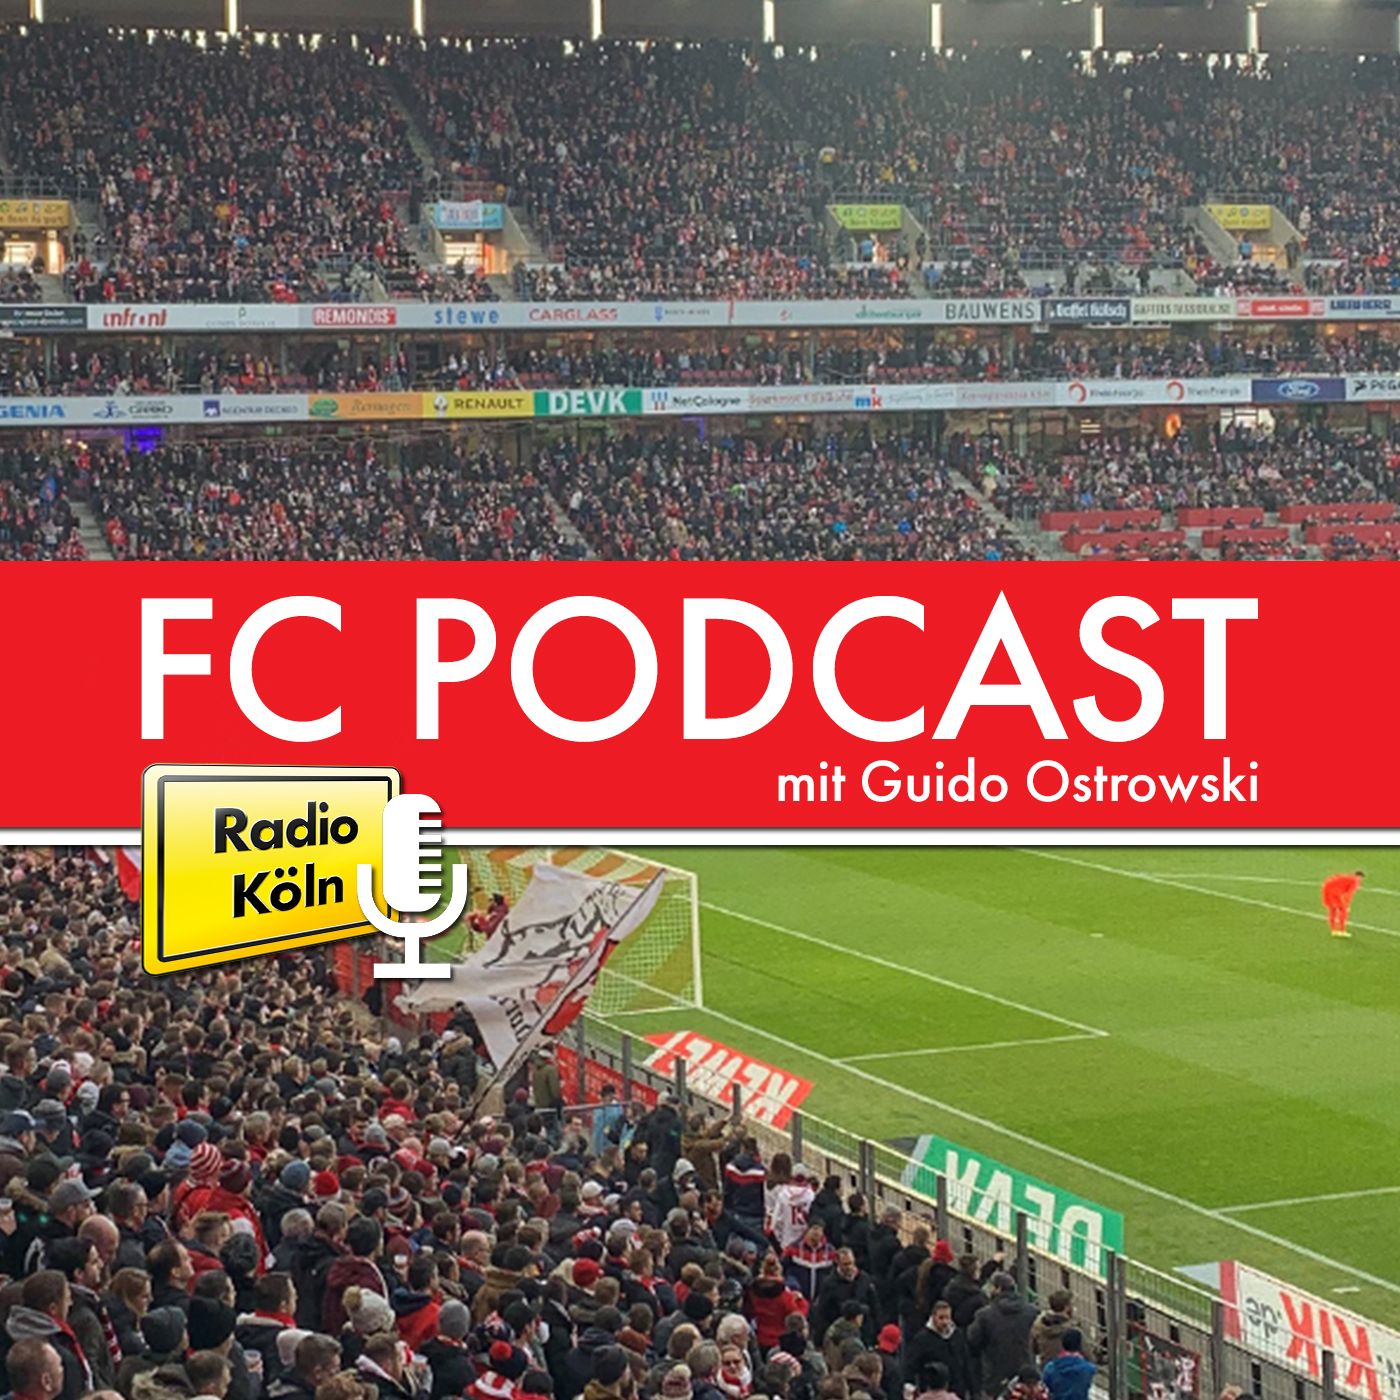 Radio Köln 107,1 FC-Podcast | Podcast kostenlos online hören